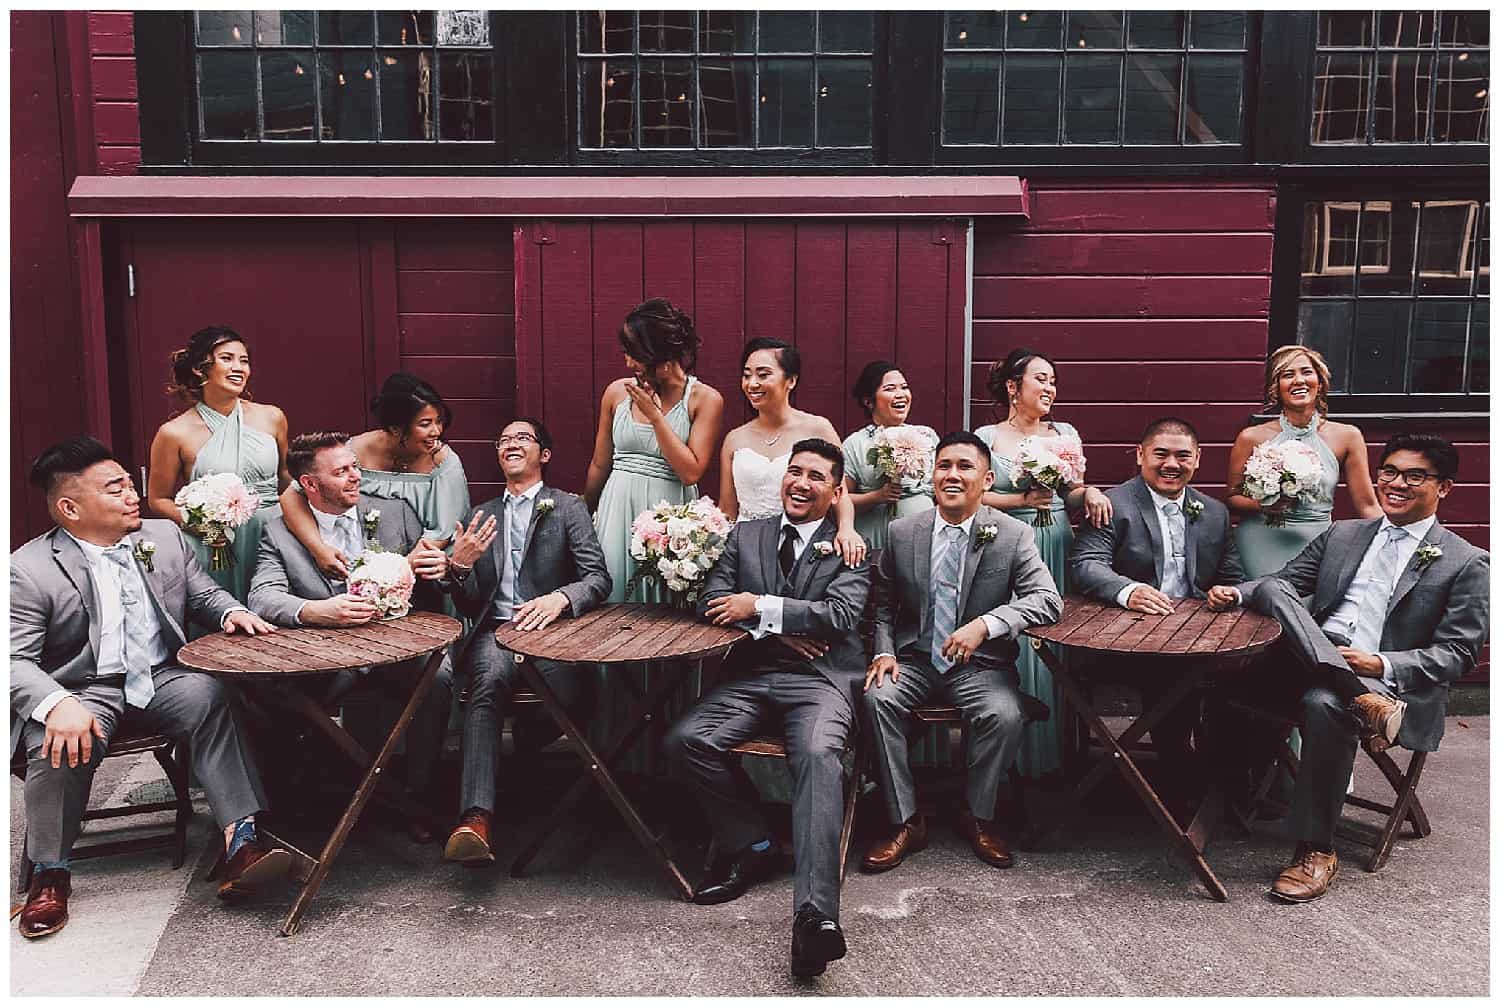 Sodo Park alley portraits by Seattle wedding photographer Kyle Goldie of Luma Weddings